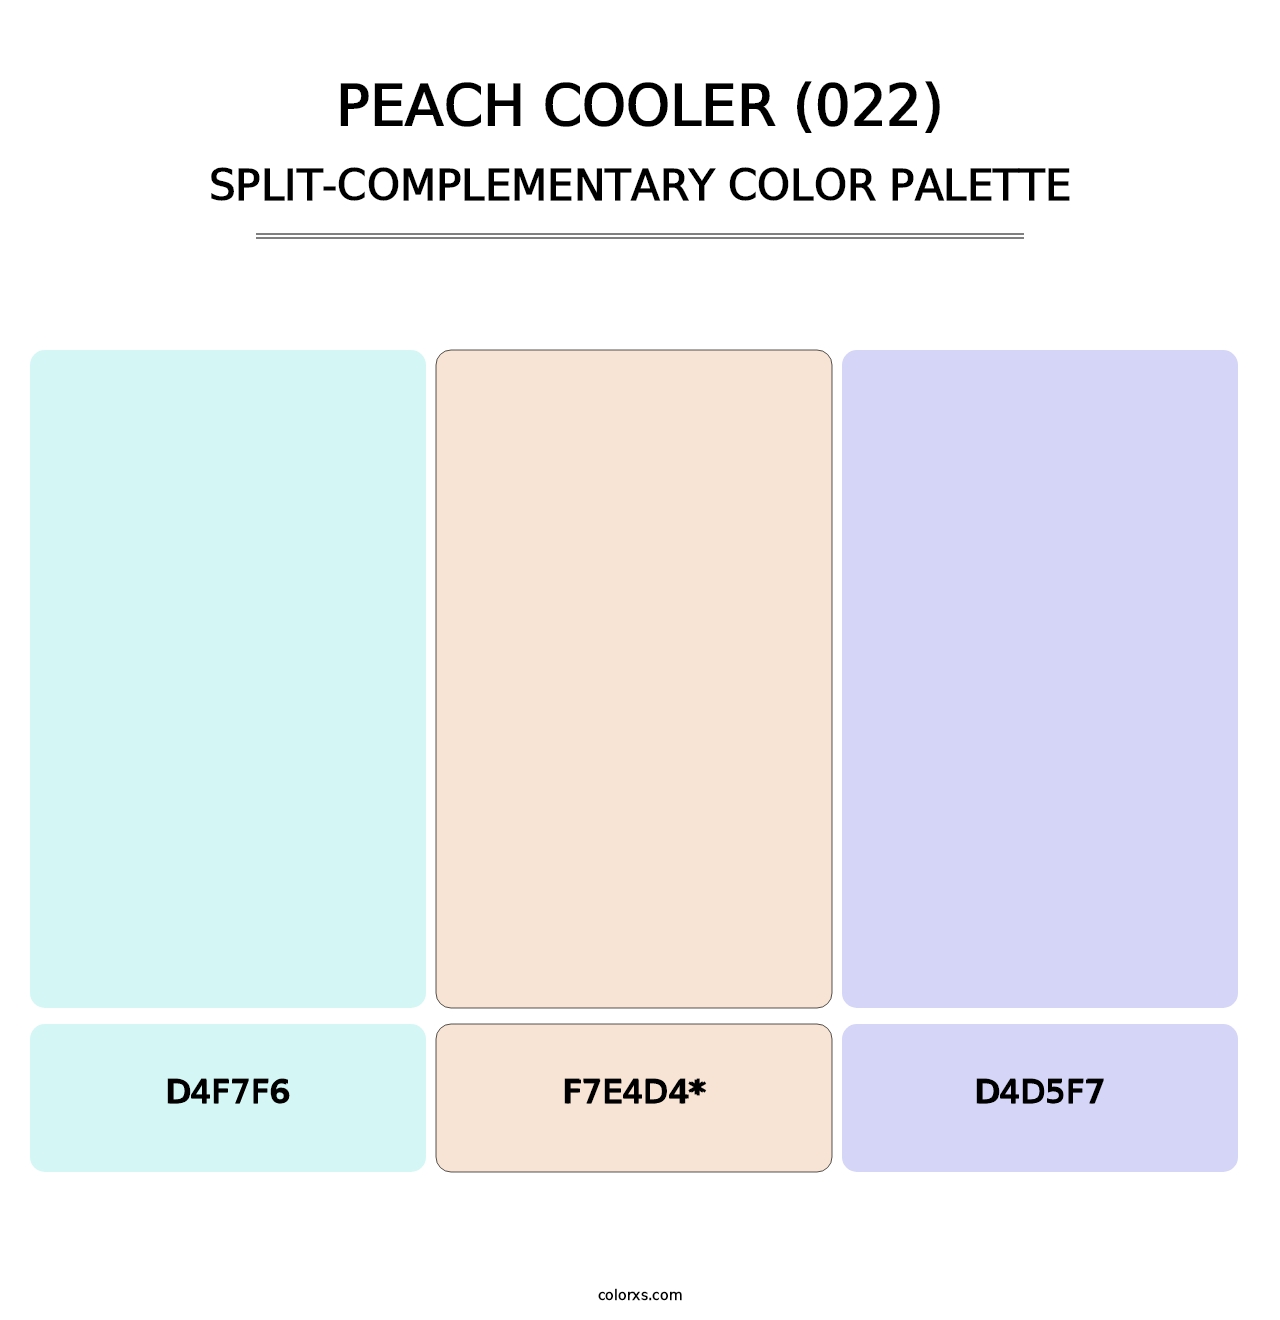 Peach Cooler (022) - Split-Complementary Color Palette